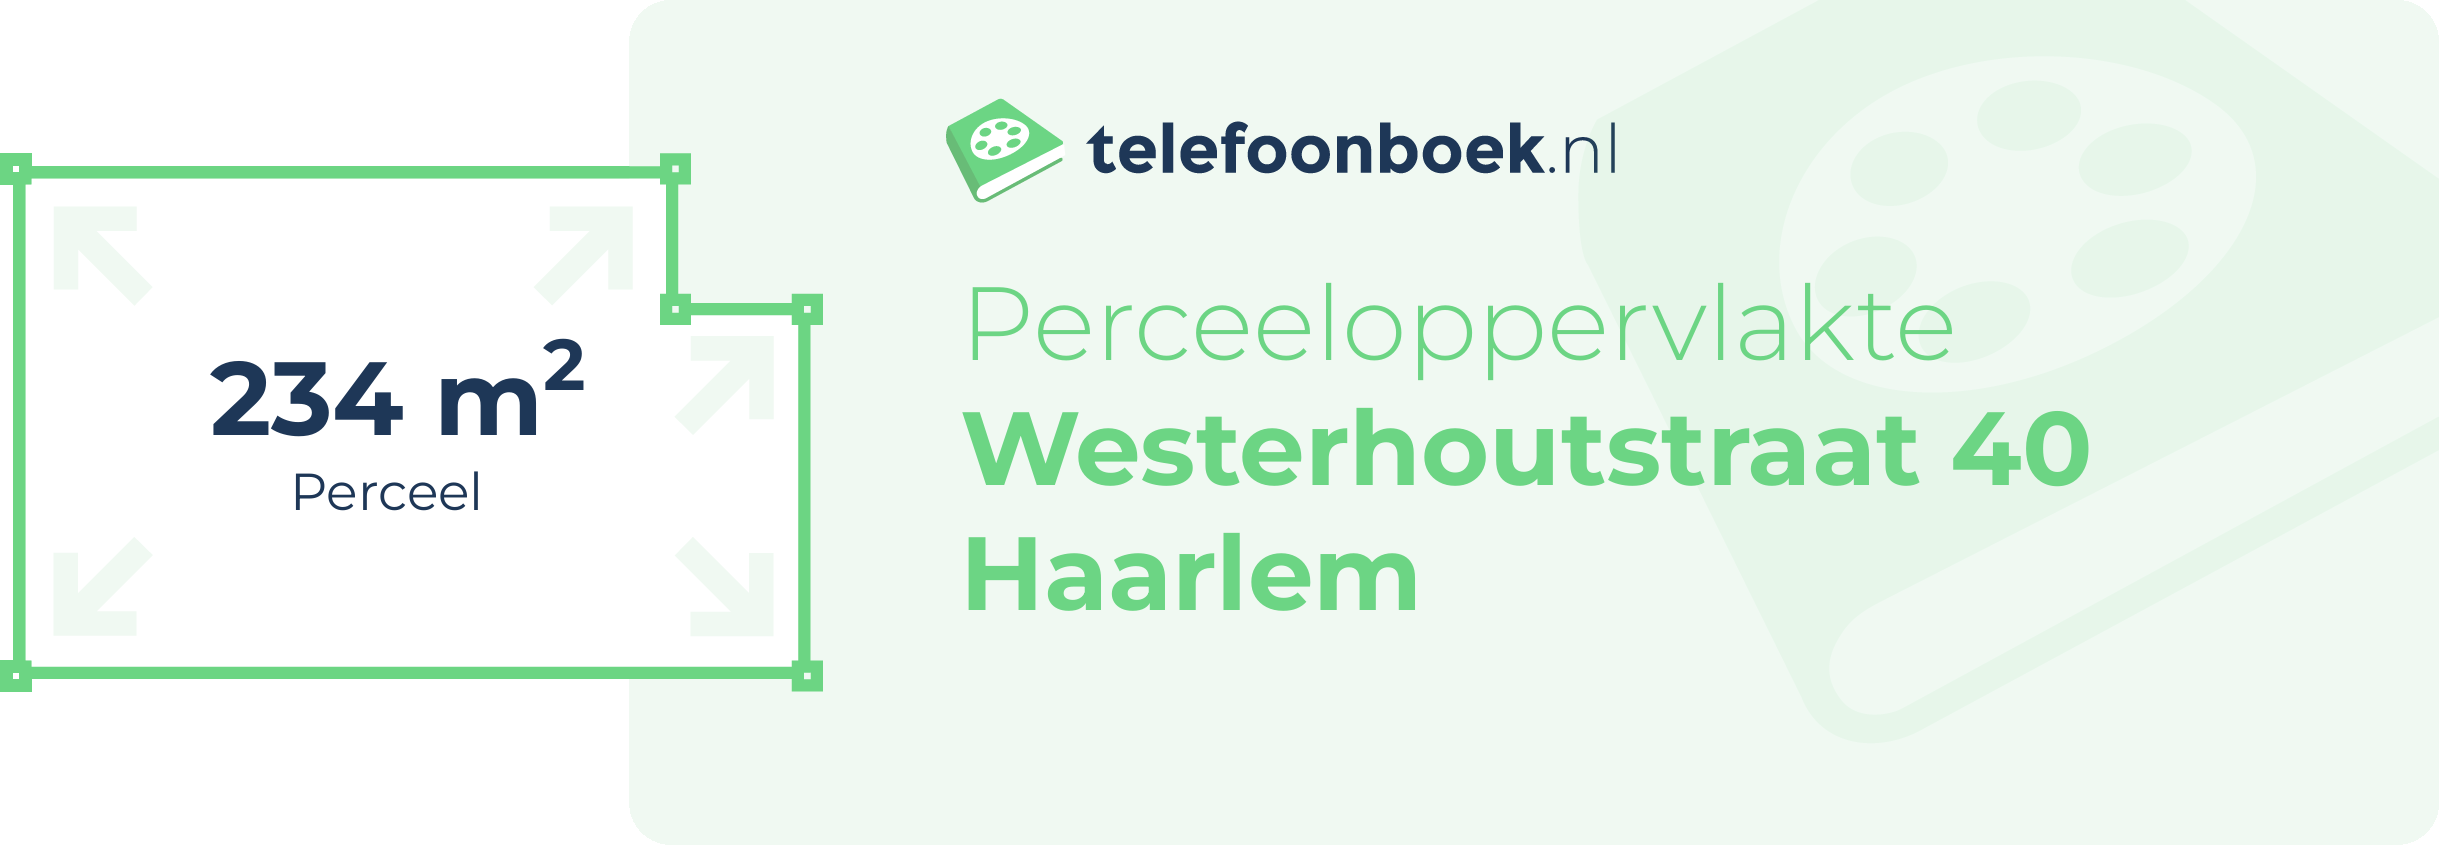 Perceeloppervlakte Westerhoutstraat 40 Haarlem